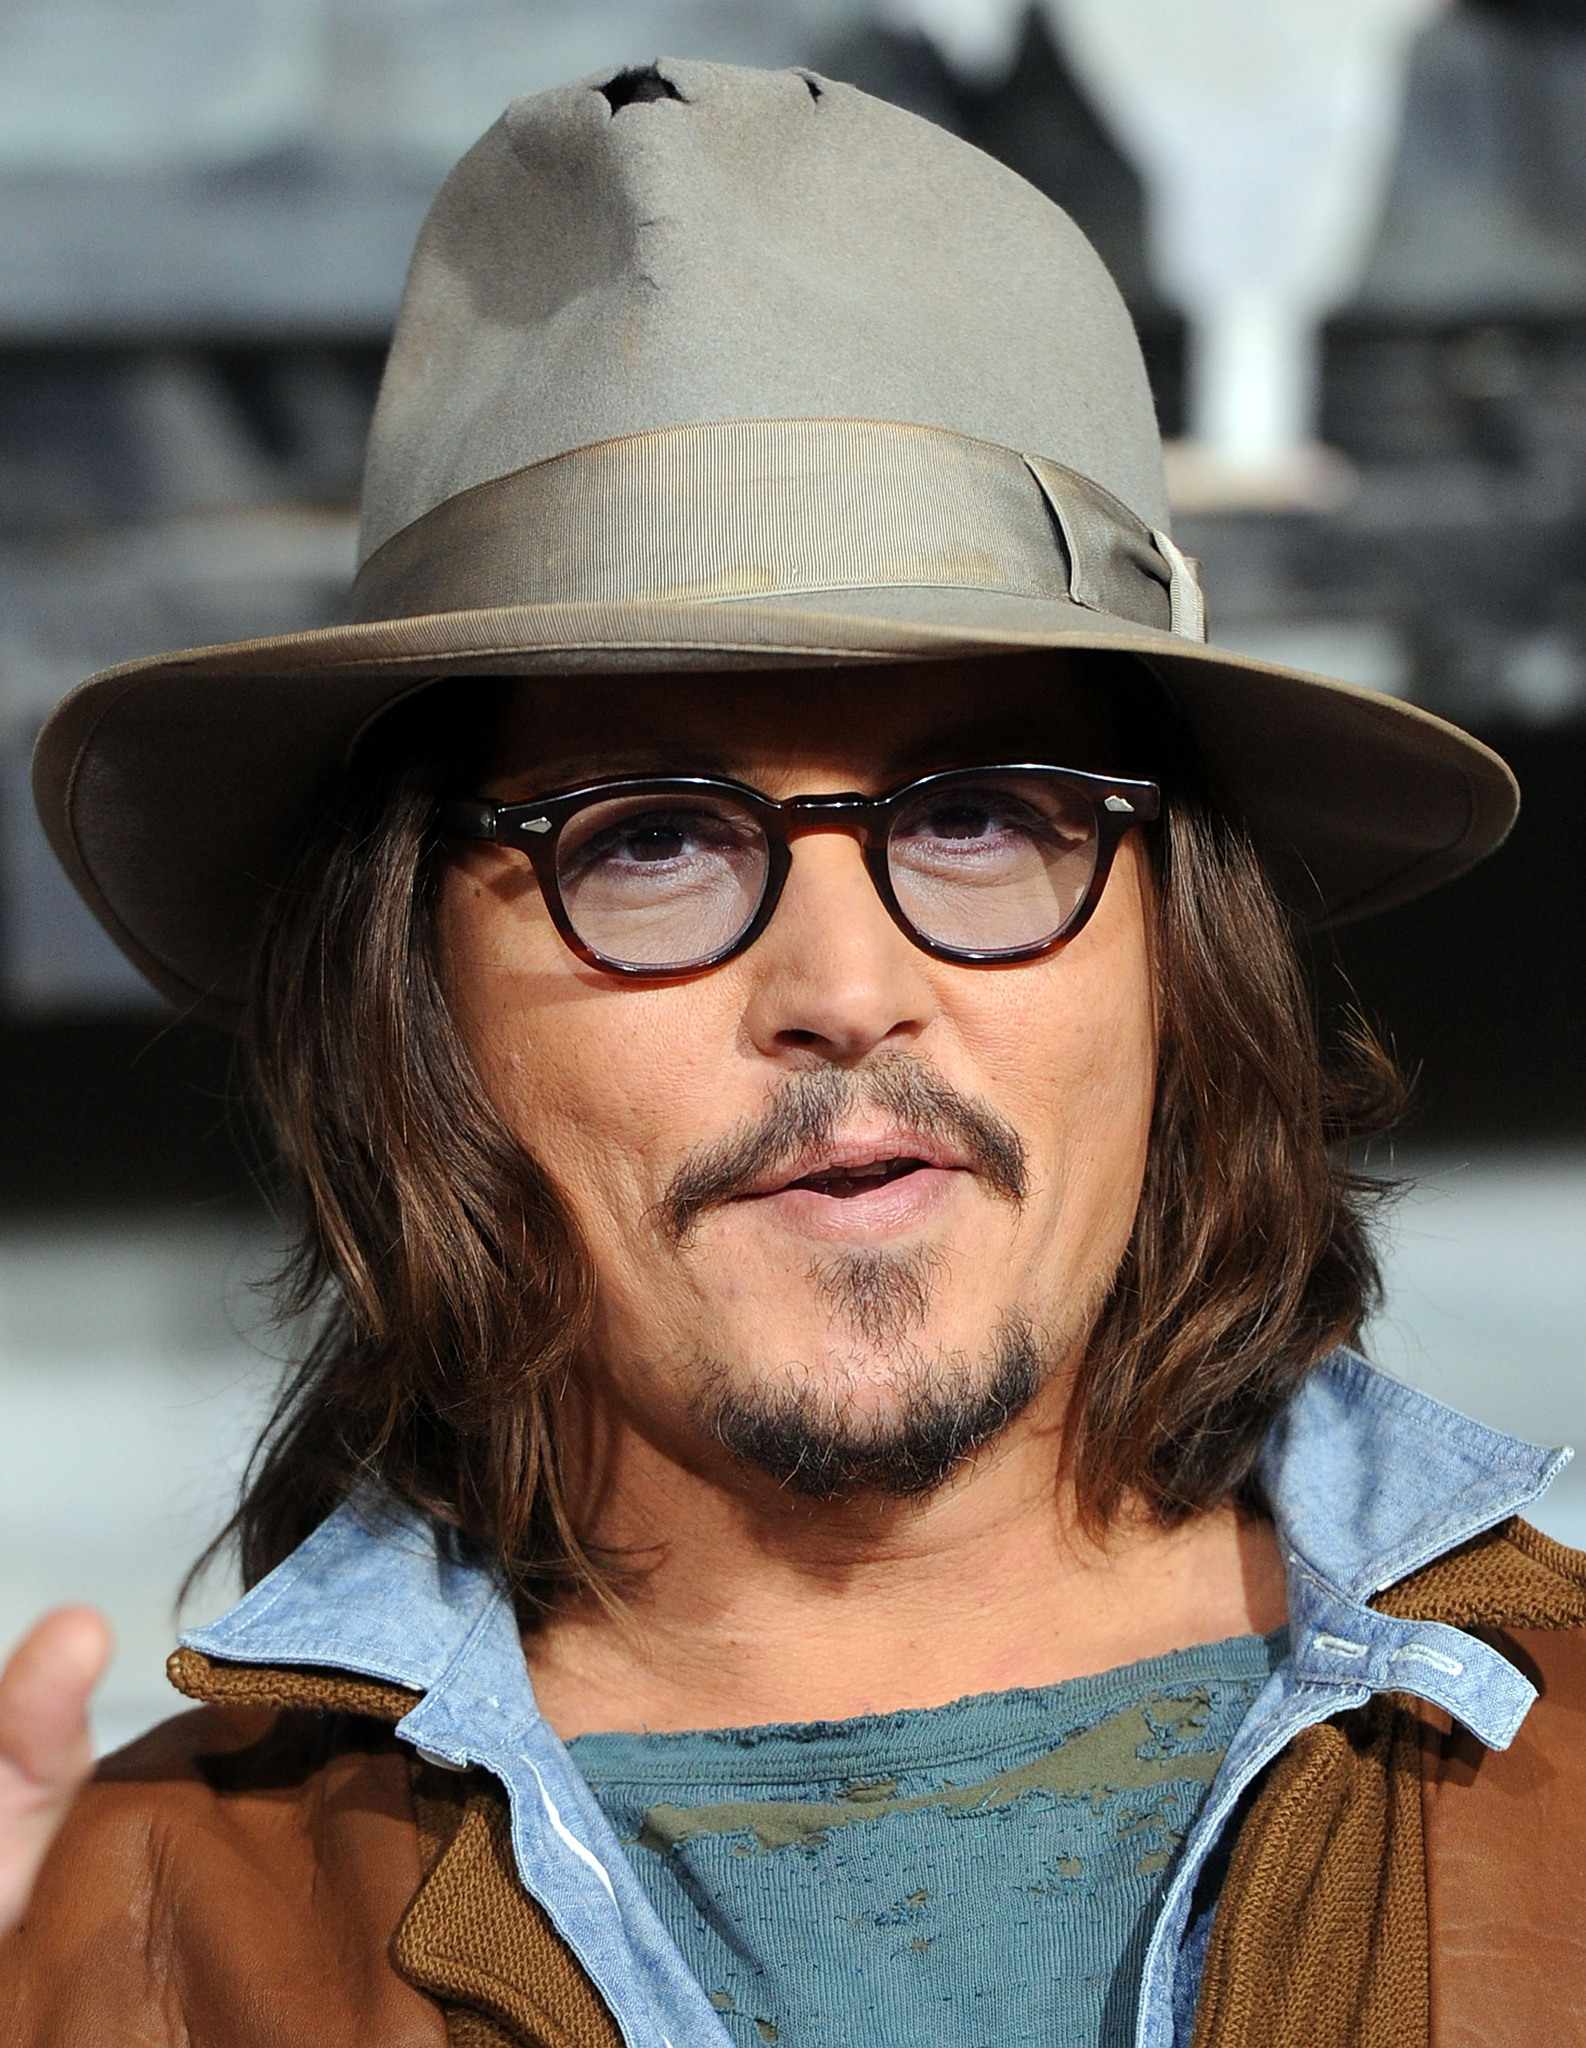 Johnny Depp at event of Rango (2011)